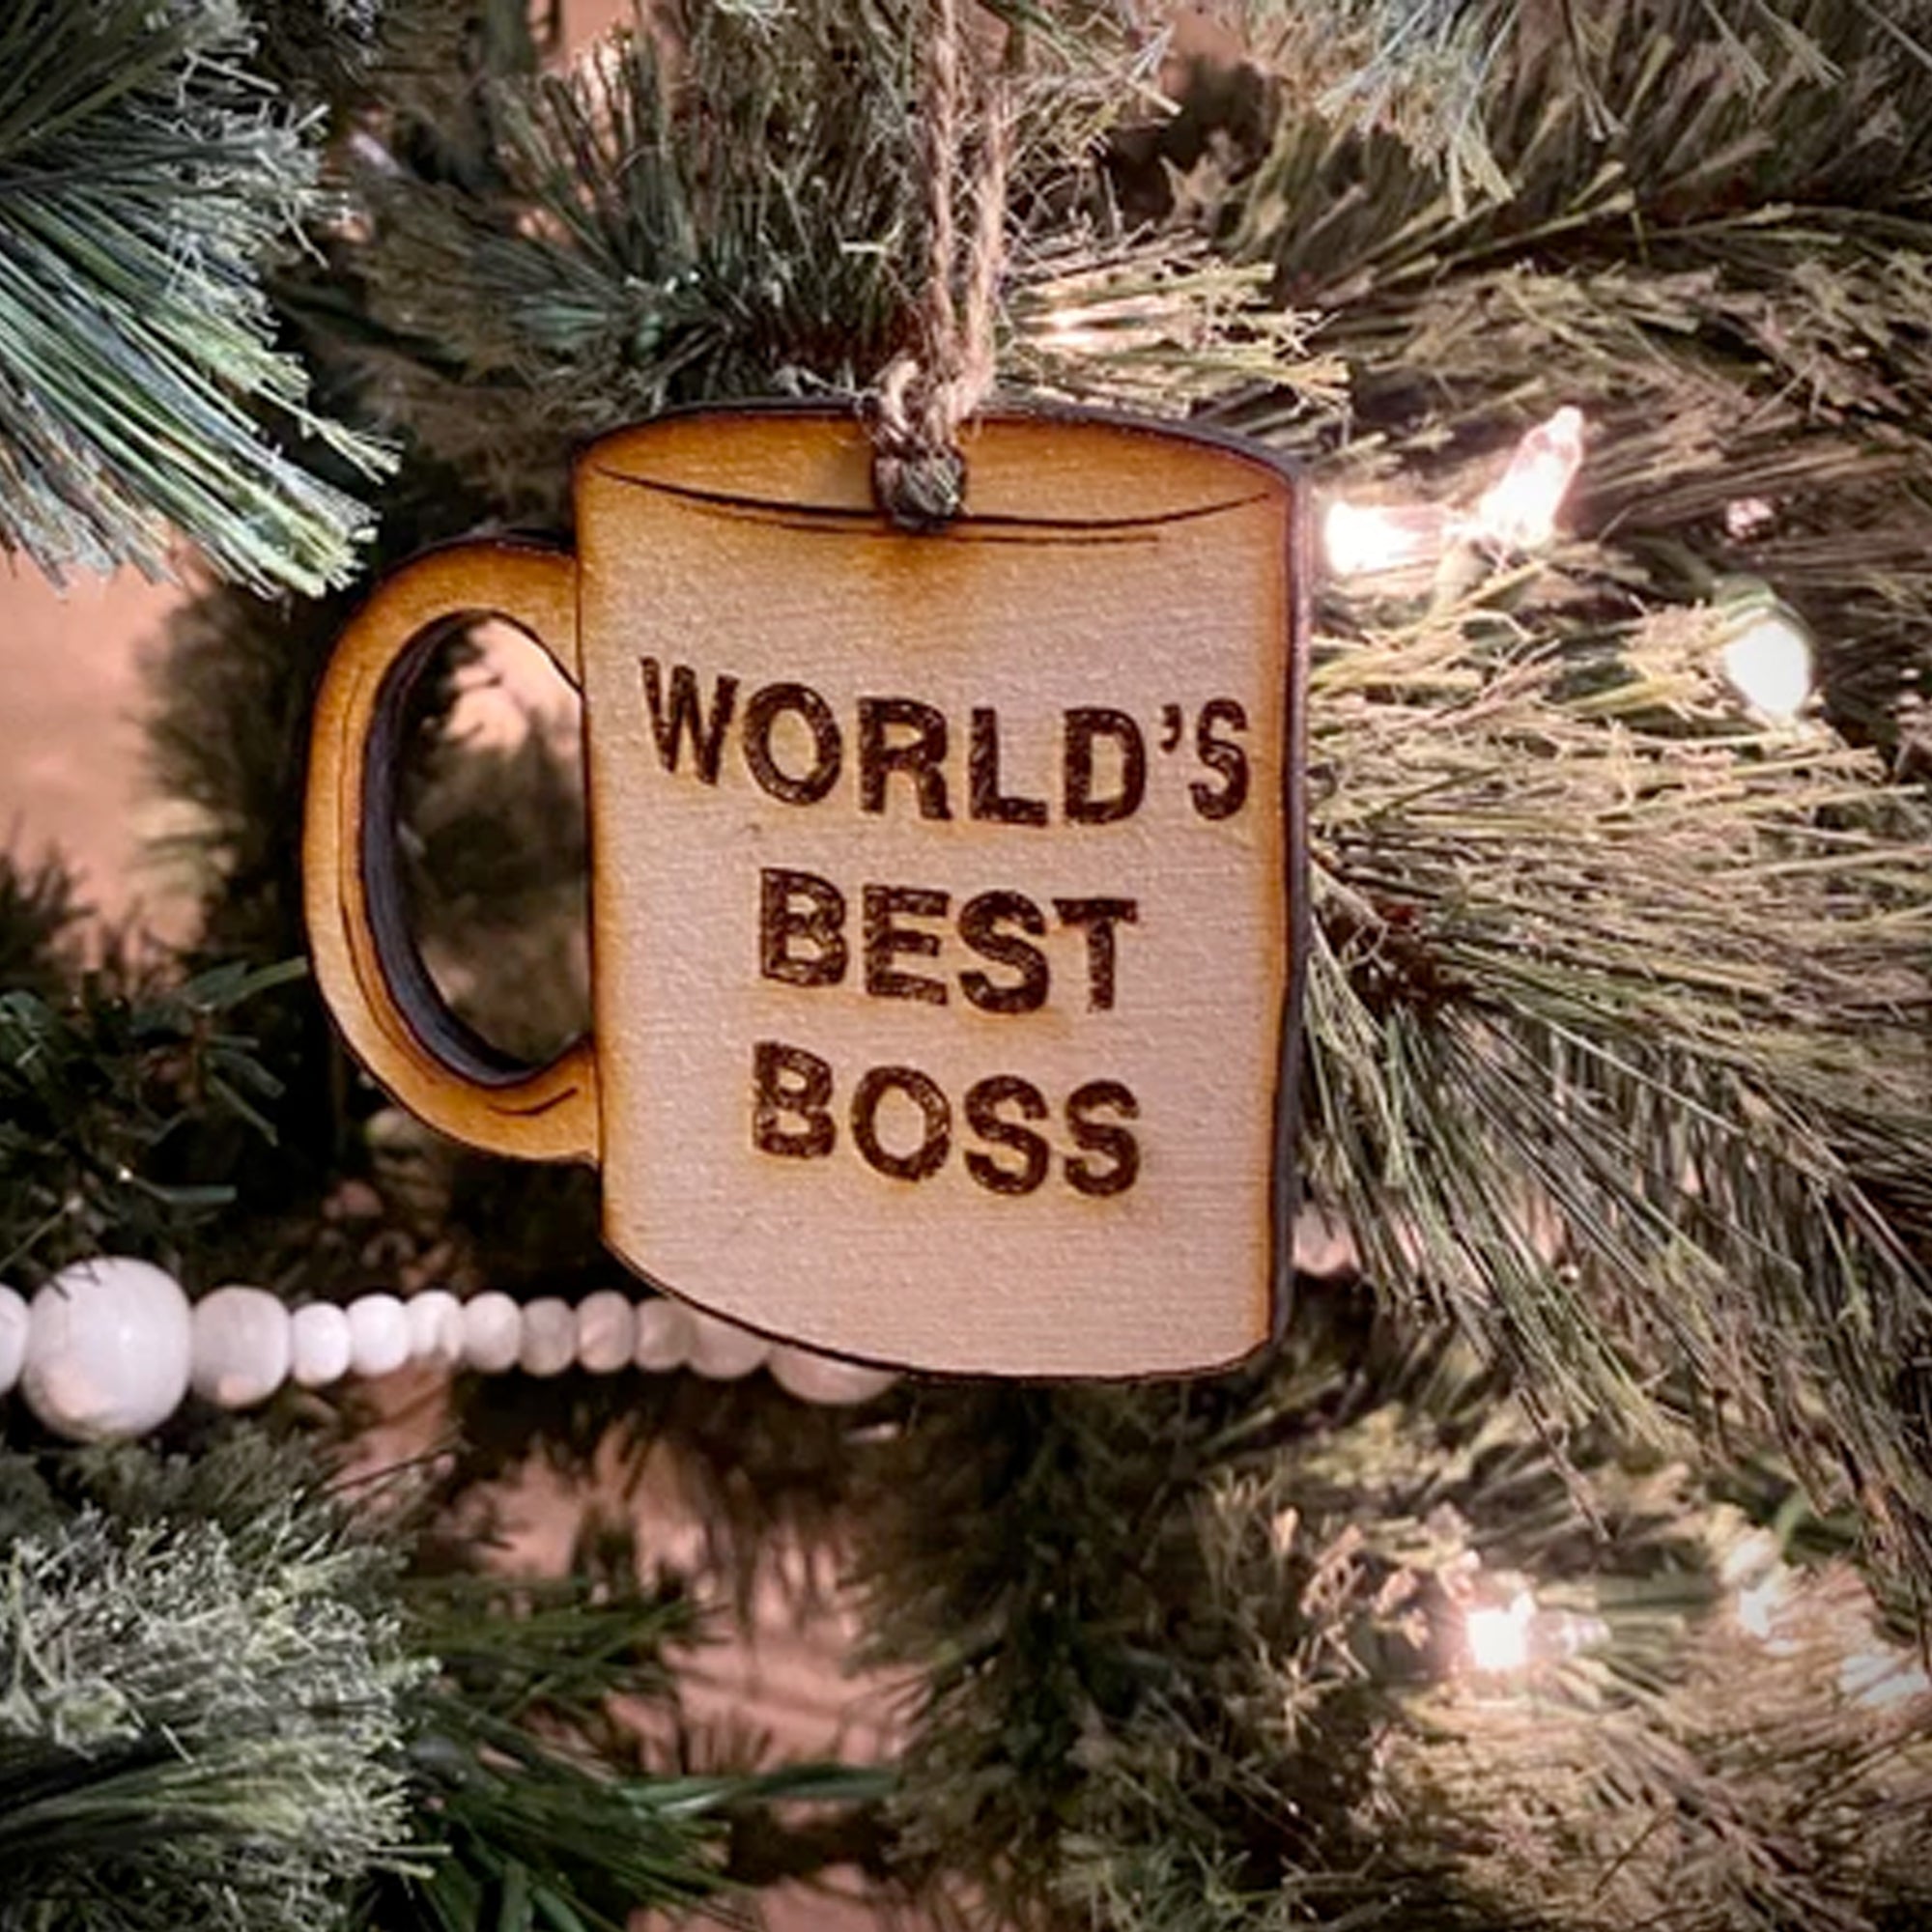 Tree Yoself World's Best Boss Mug Wooden Christmas Ornament